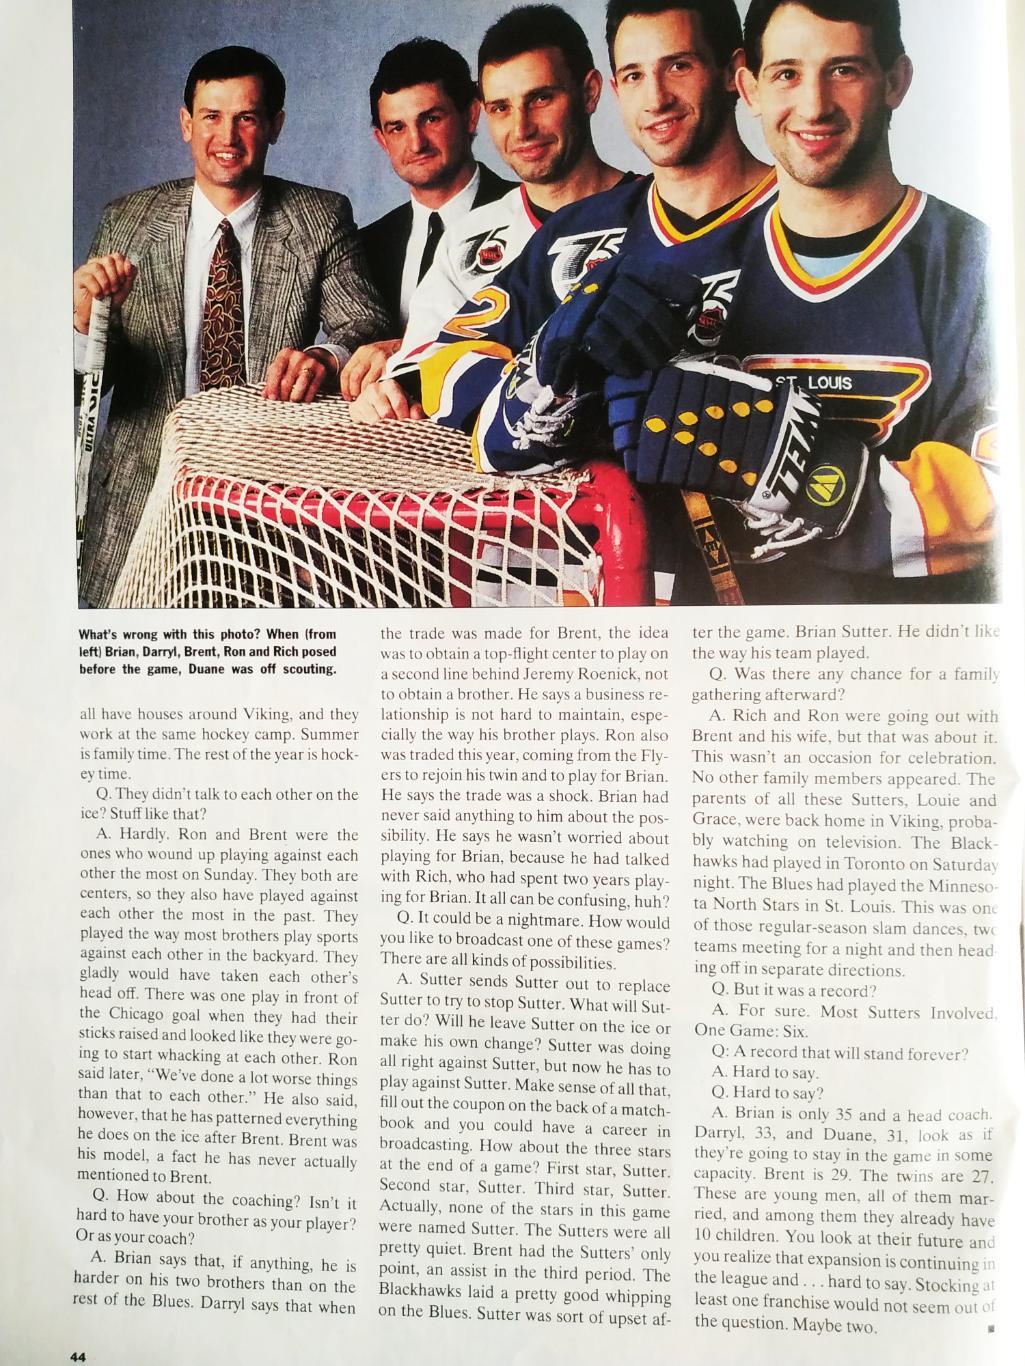 ХОККЕЙ ЕЖЕНЕДЕЛЬНИК СПОРТ ИЛЛЮСТРЕЙТЕД НХЛ 25 NOV 1991 NHL SPORTS ILLUSTRATED 3